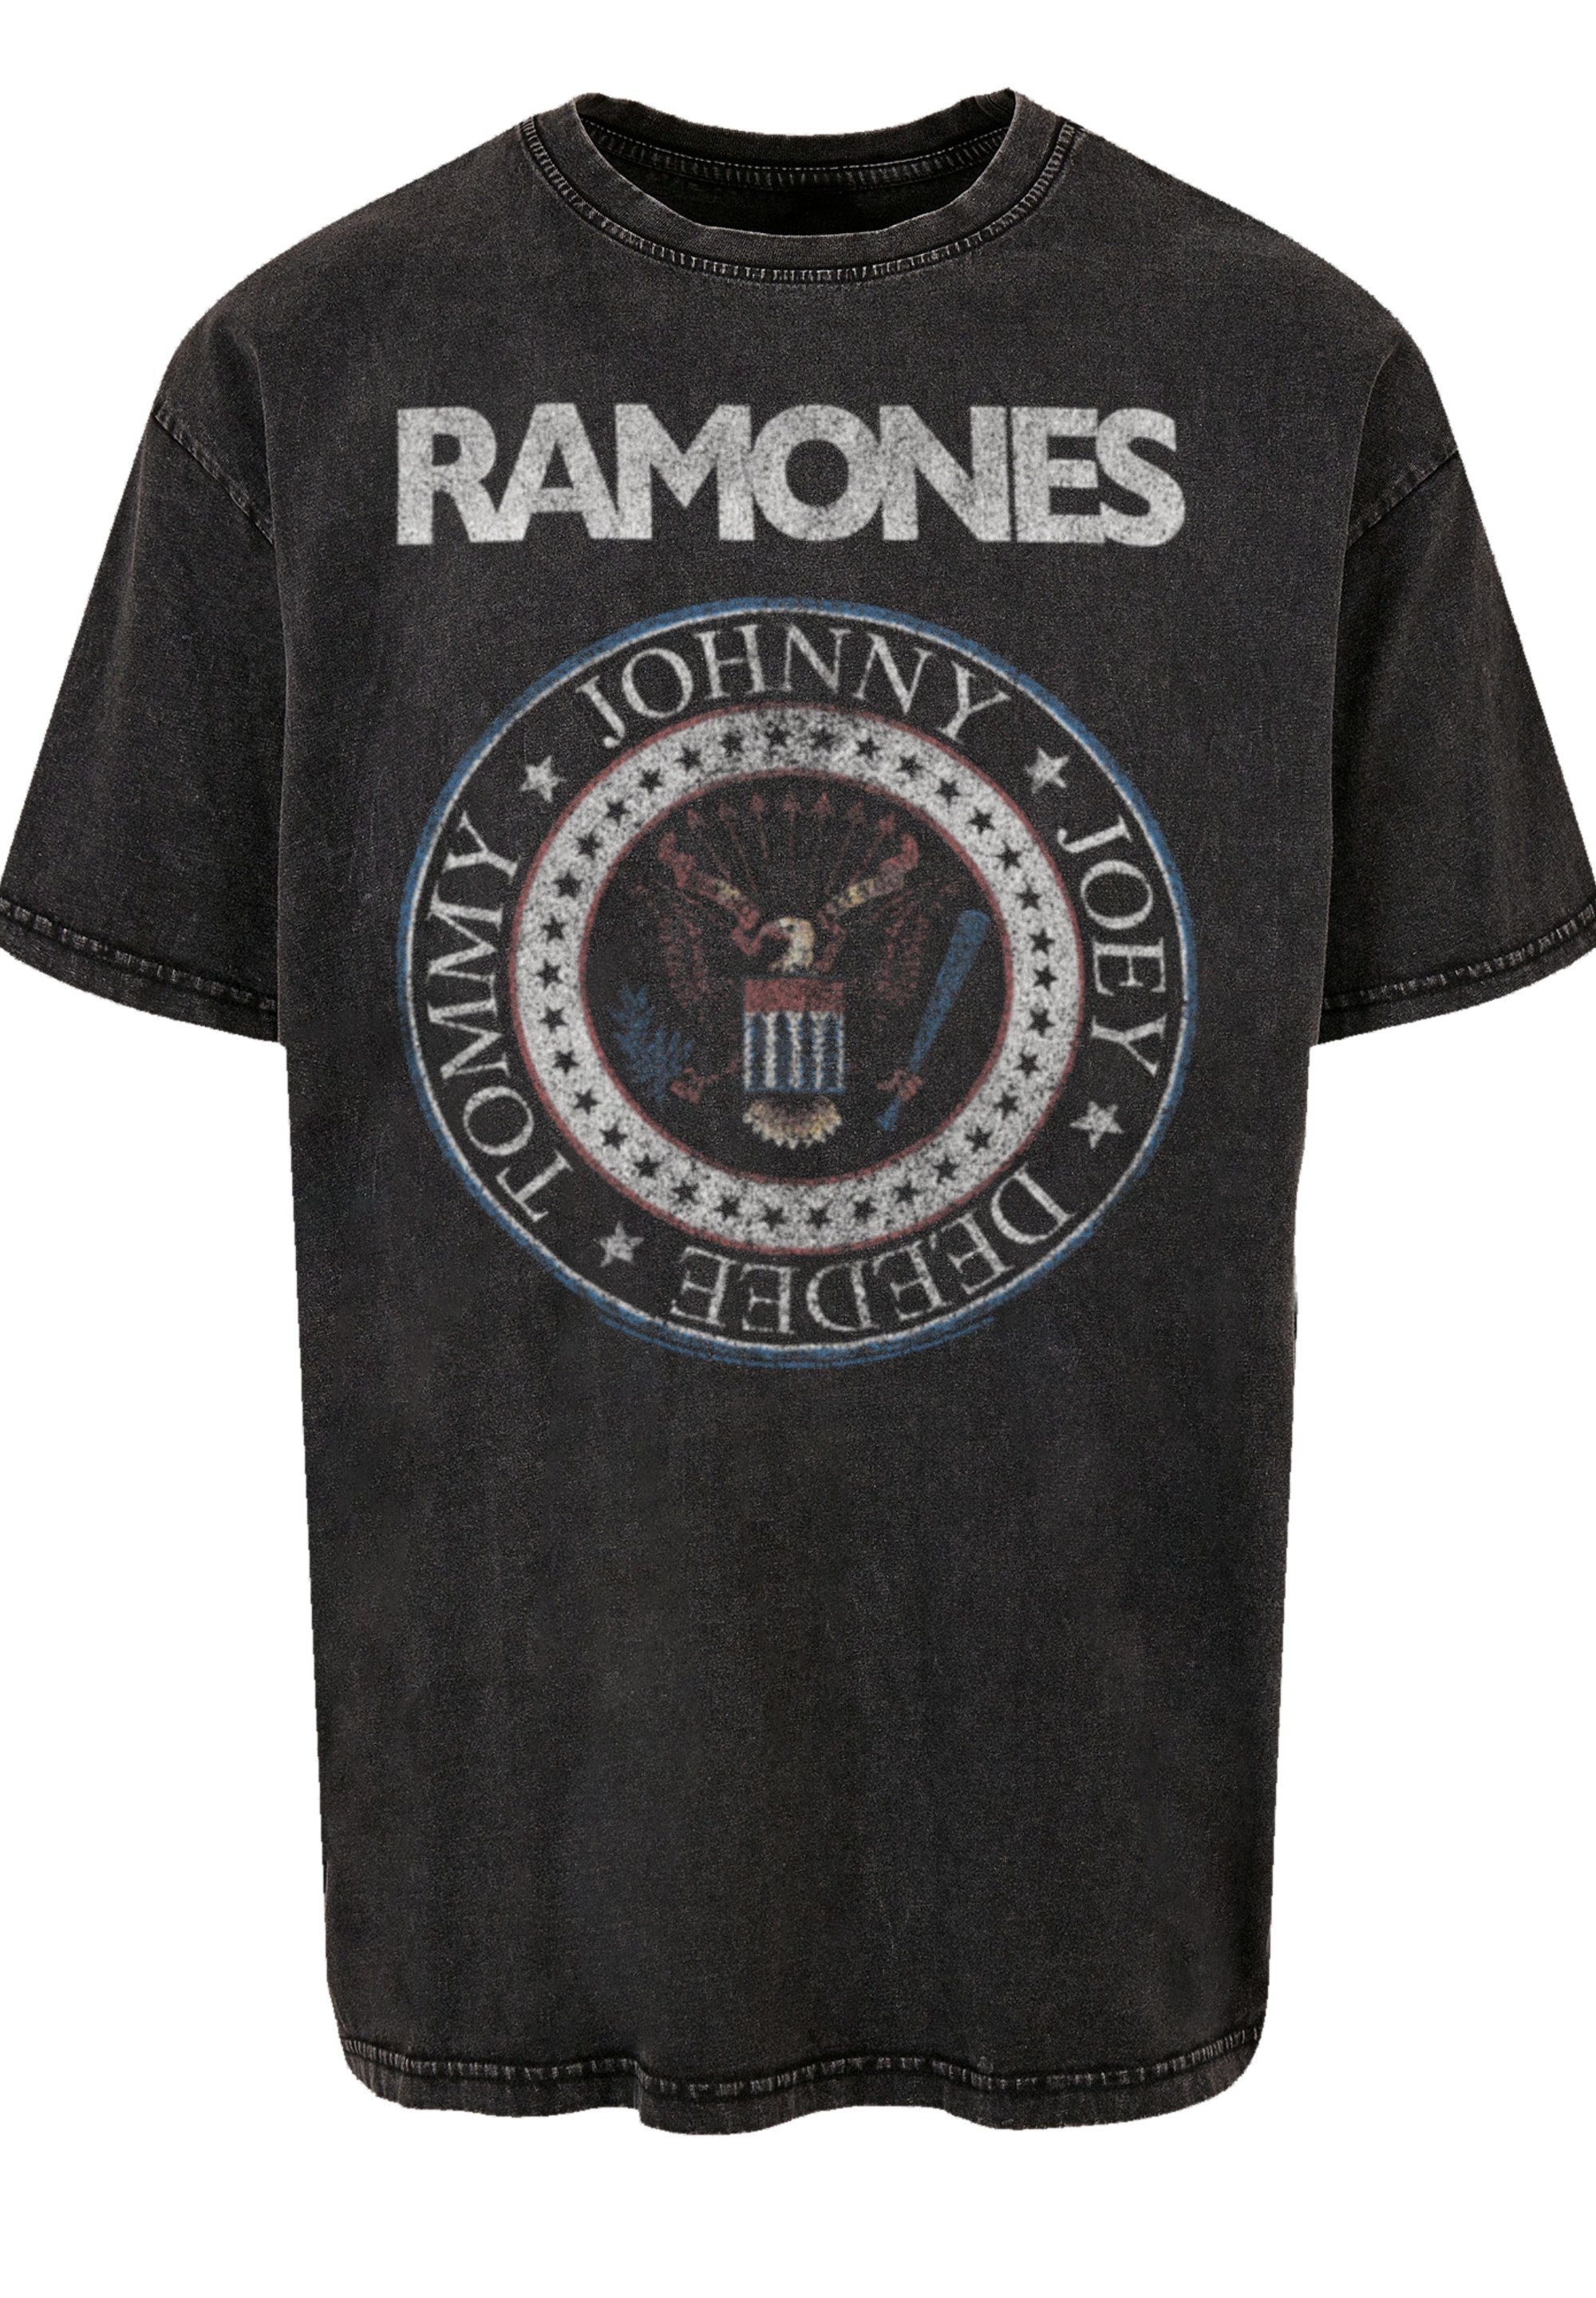 T-Shirt Rock-Musik Seal And F4NT4STIC Qualität, White Premium Rock Red Band Ramones schwarz Band, Musik